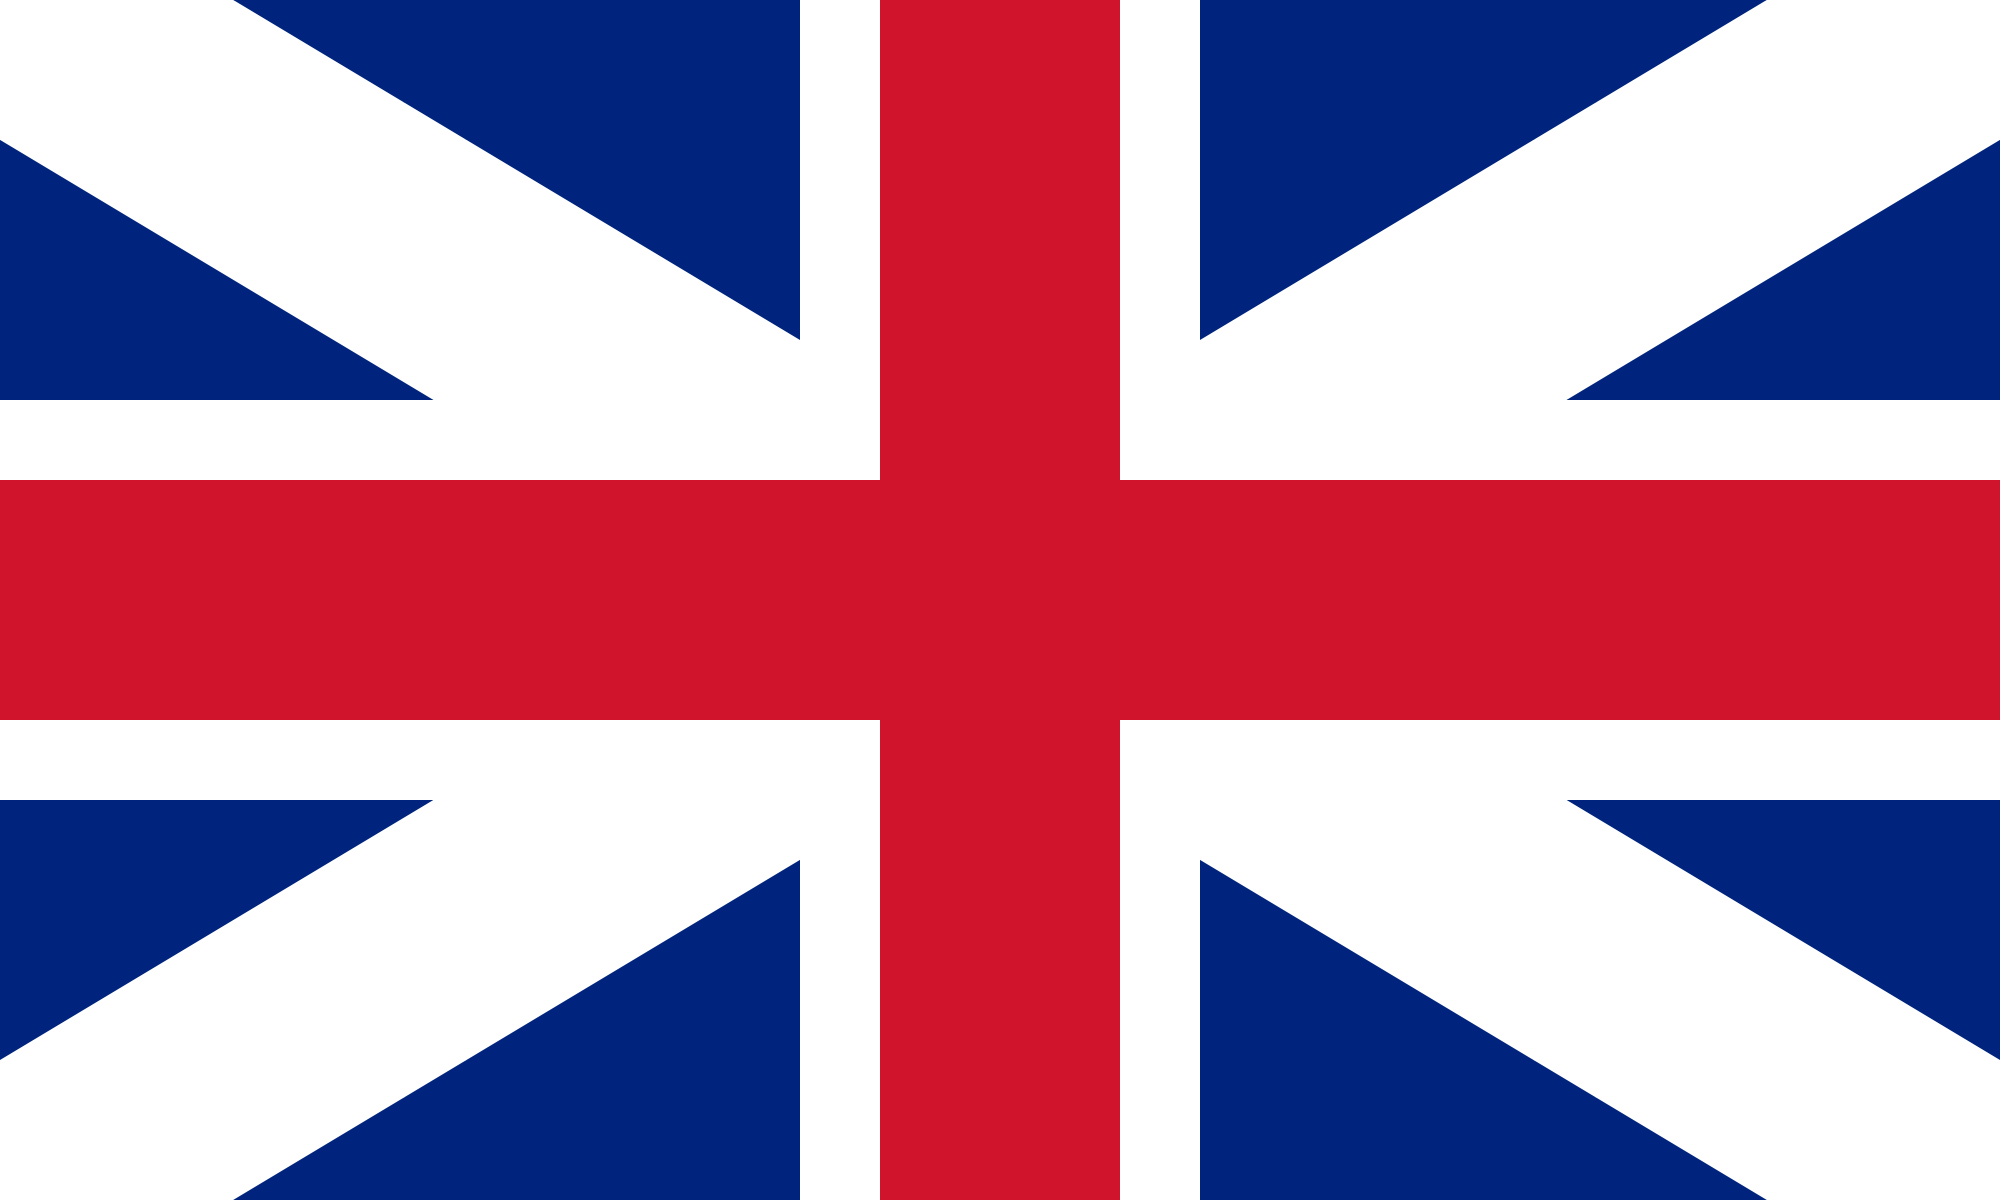 Union Jack - Wikipedia, the free encyclopedia